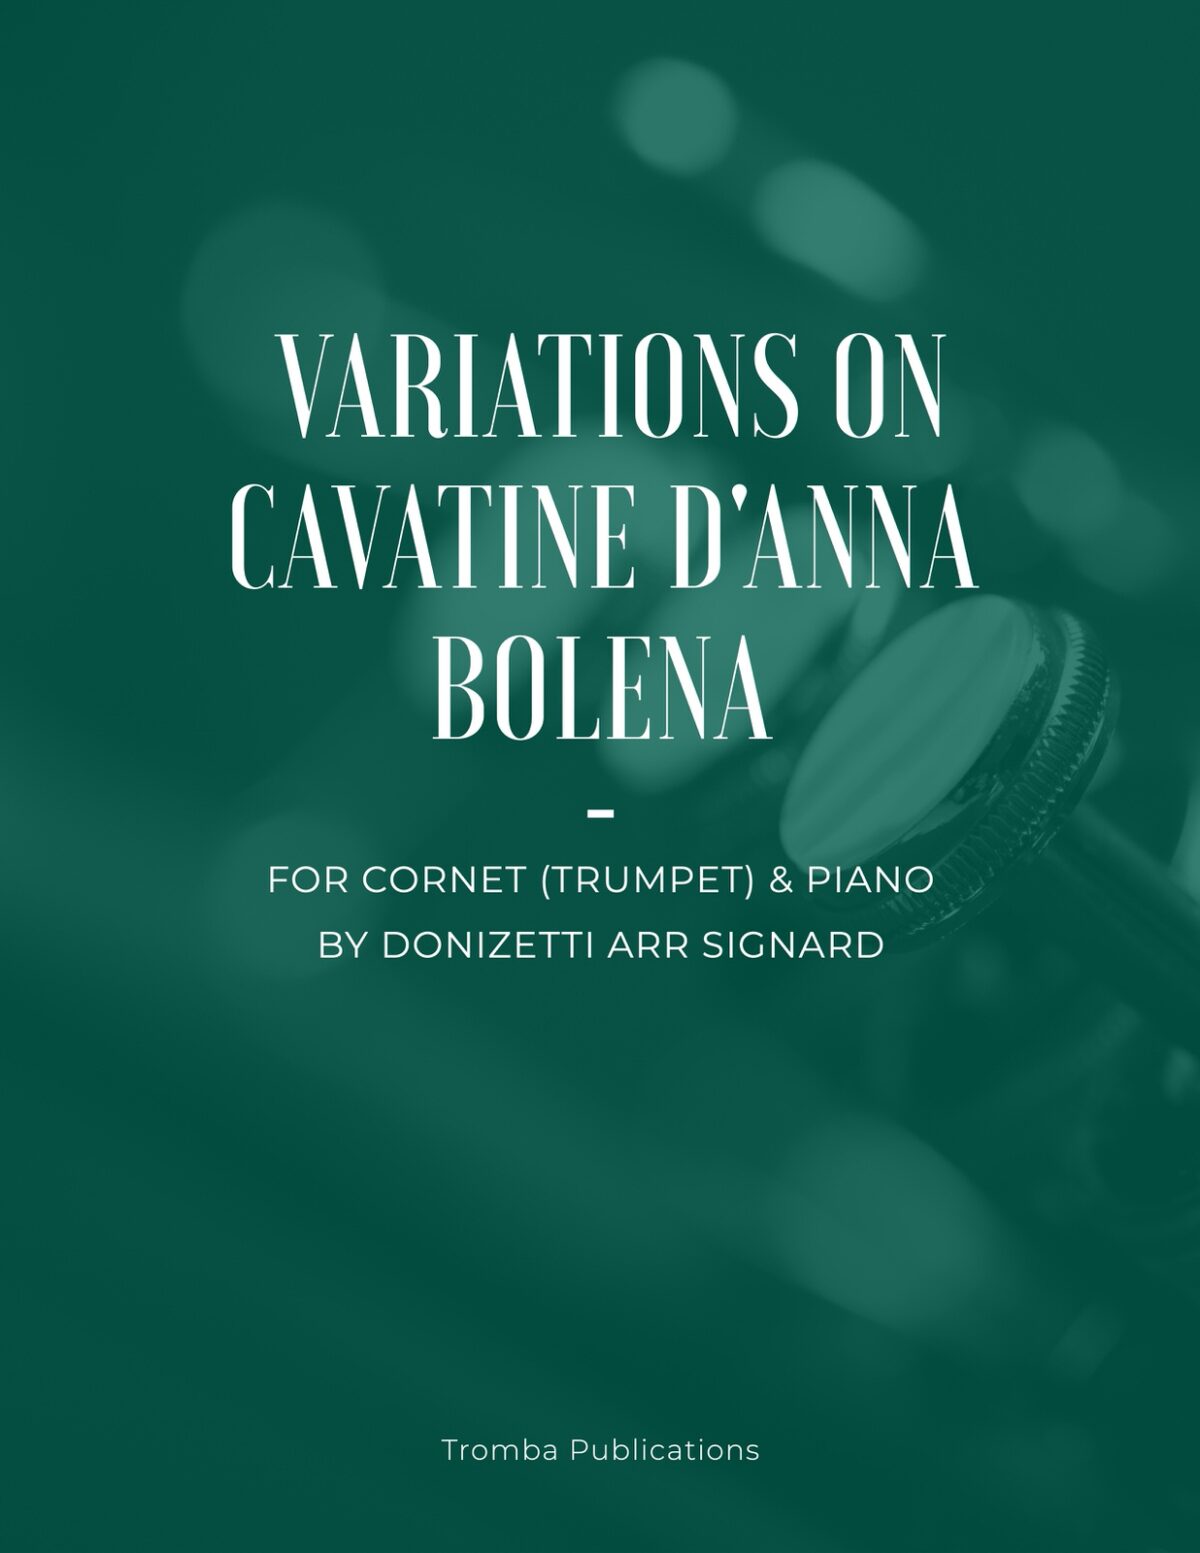 Donizetti arr. Signard, Variations on Cavatine d'Anna Bolena for Trumpet and Piano-p1